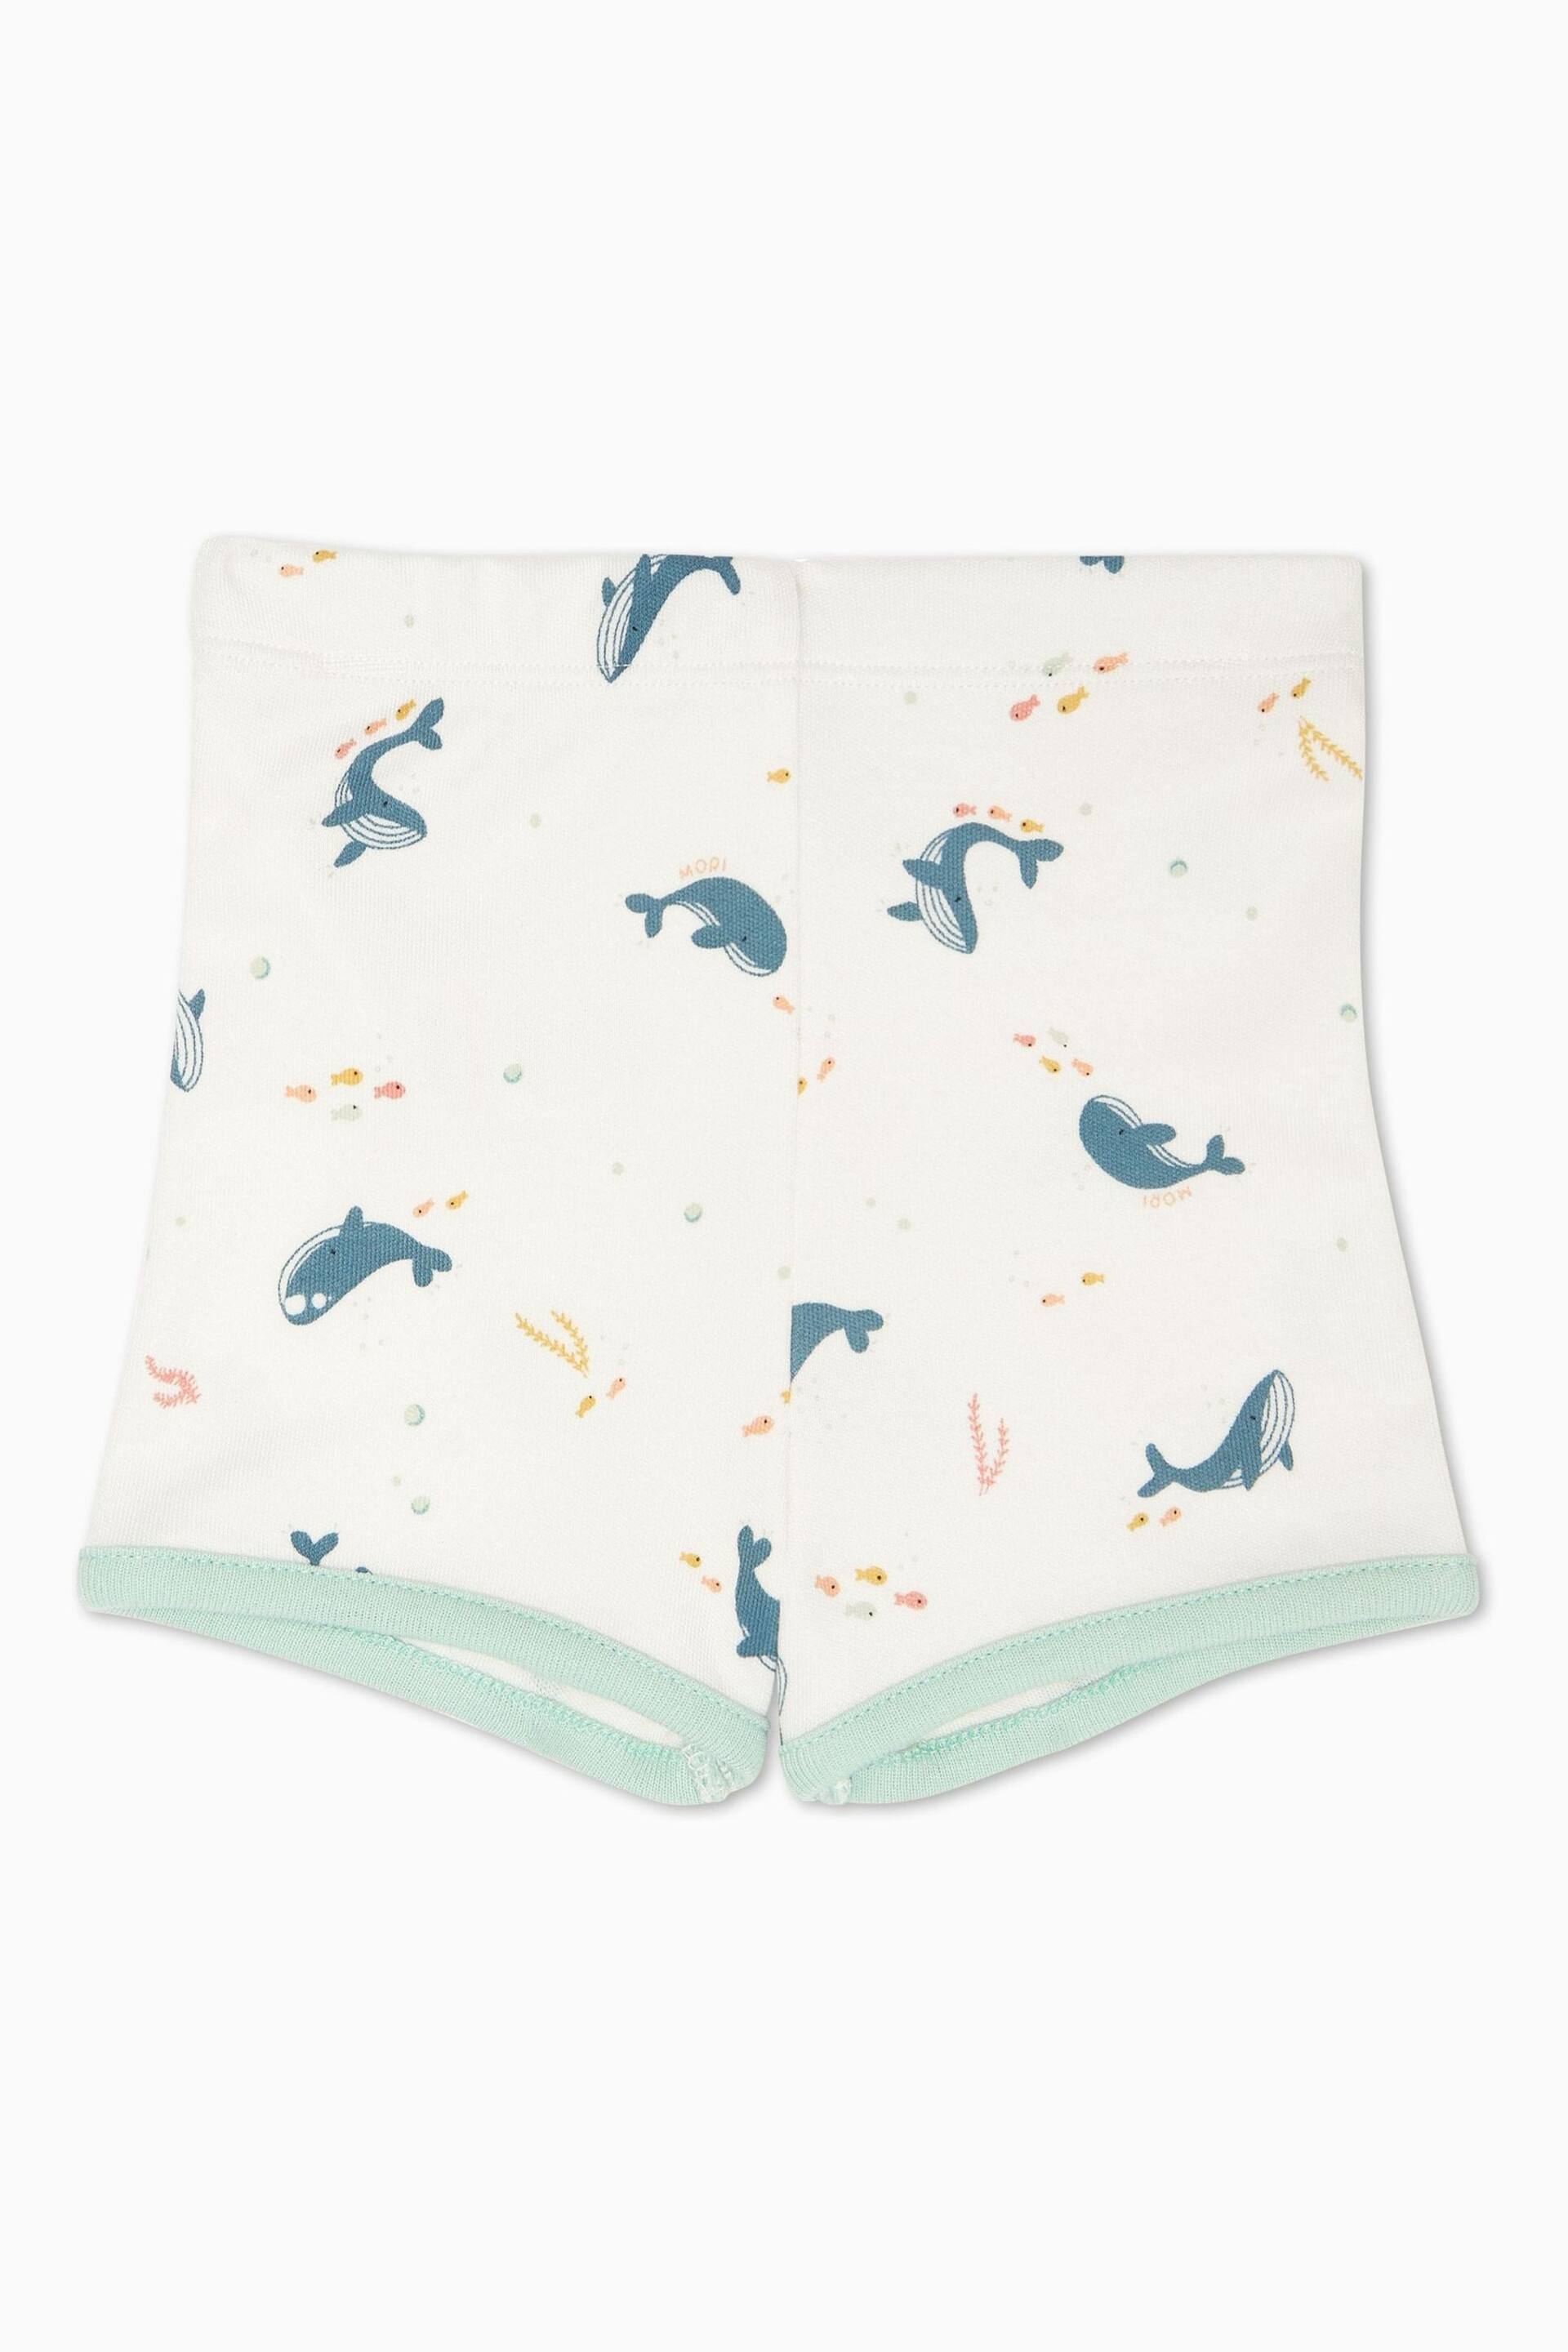 MORI Organic Cotton & Bamboo Whale White Print Short Pyjama Set - Image 1 of 4